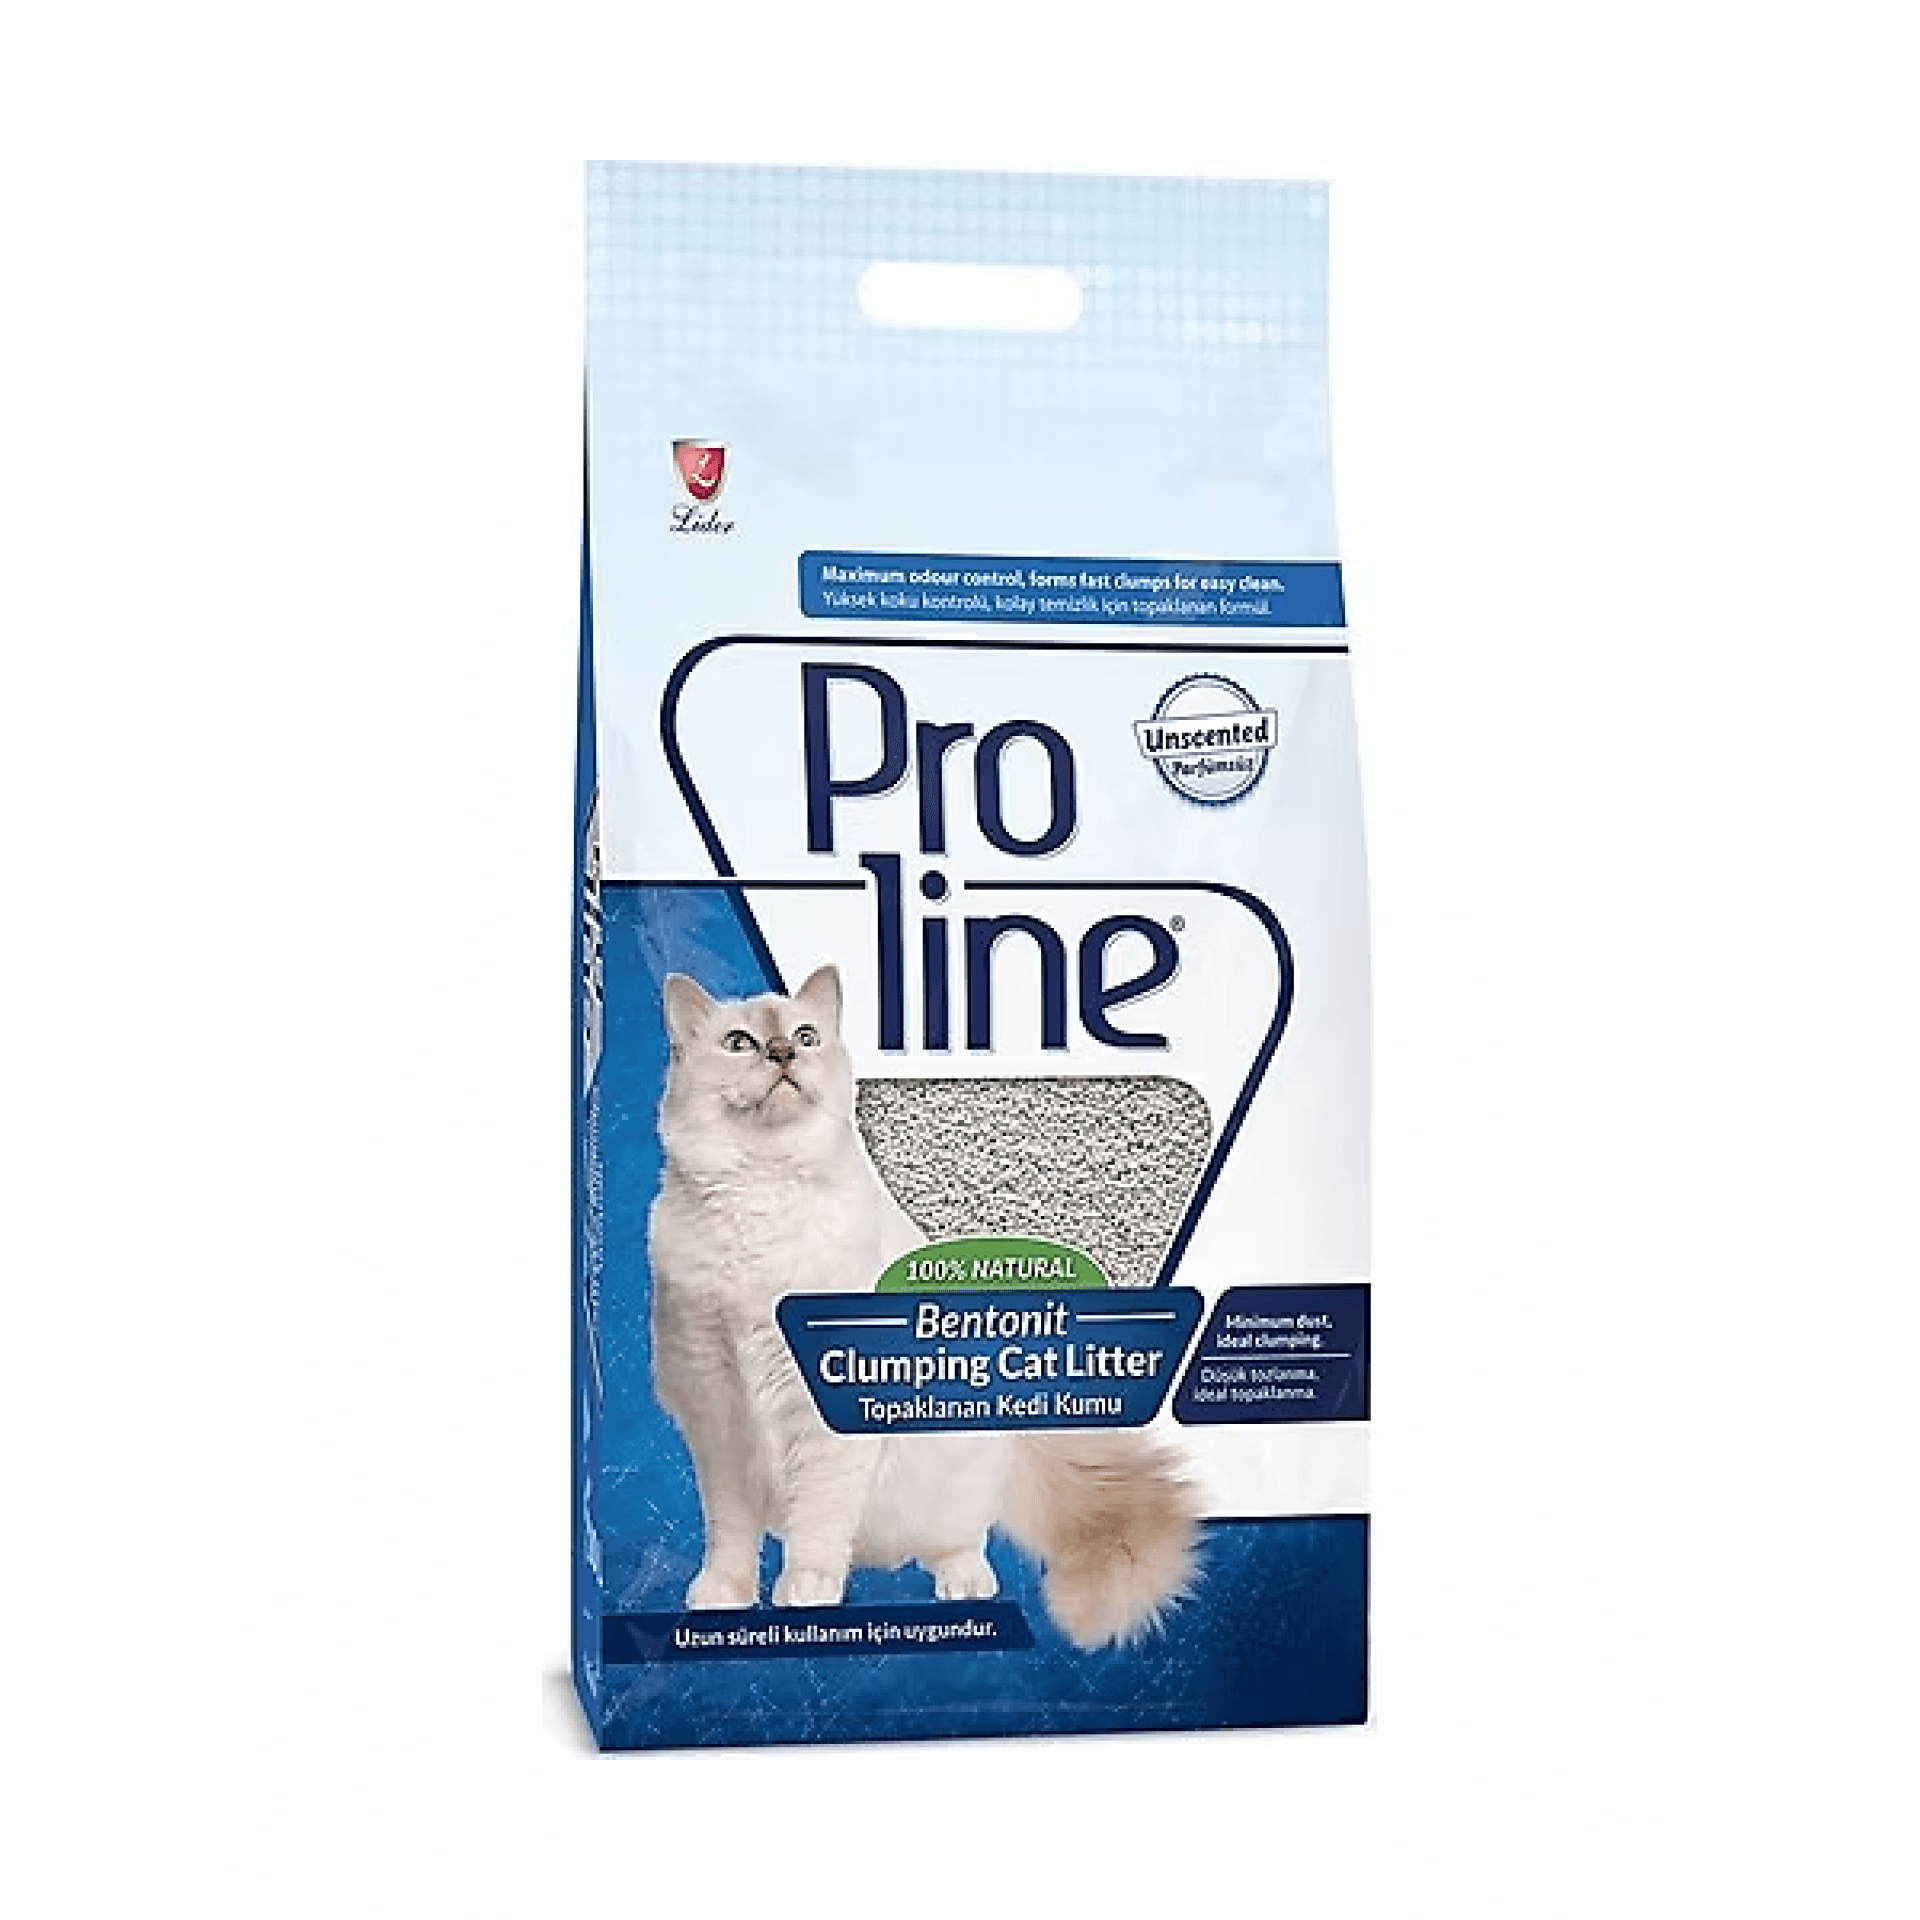 Proline Parfümsüz Kokusuz İnce Taneli Topaklanan Kedi Kumu 20 lt 